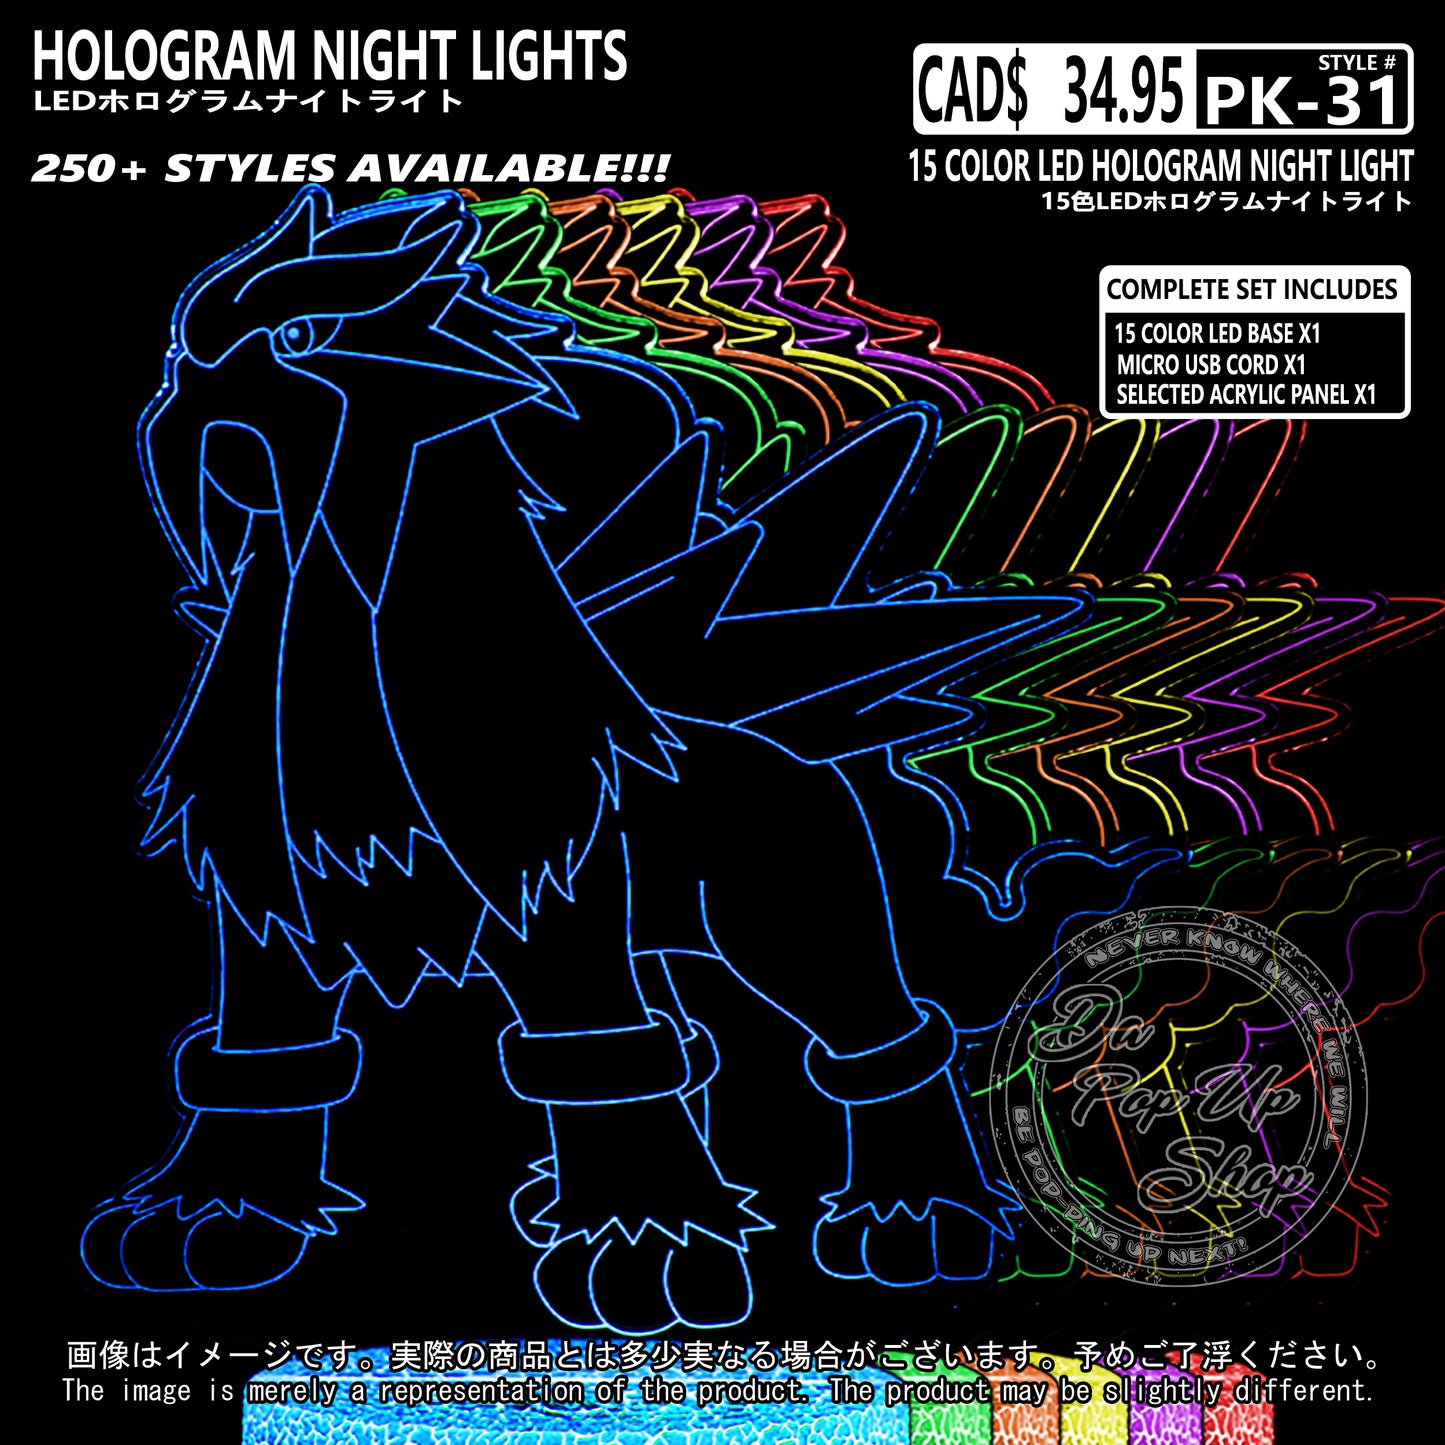 (PKM-31) ENTEI Pokemon Hologram LED Night Light